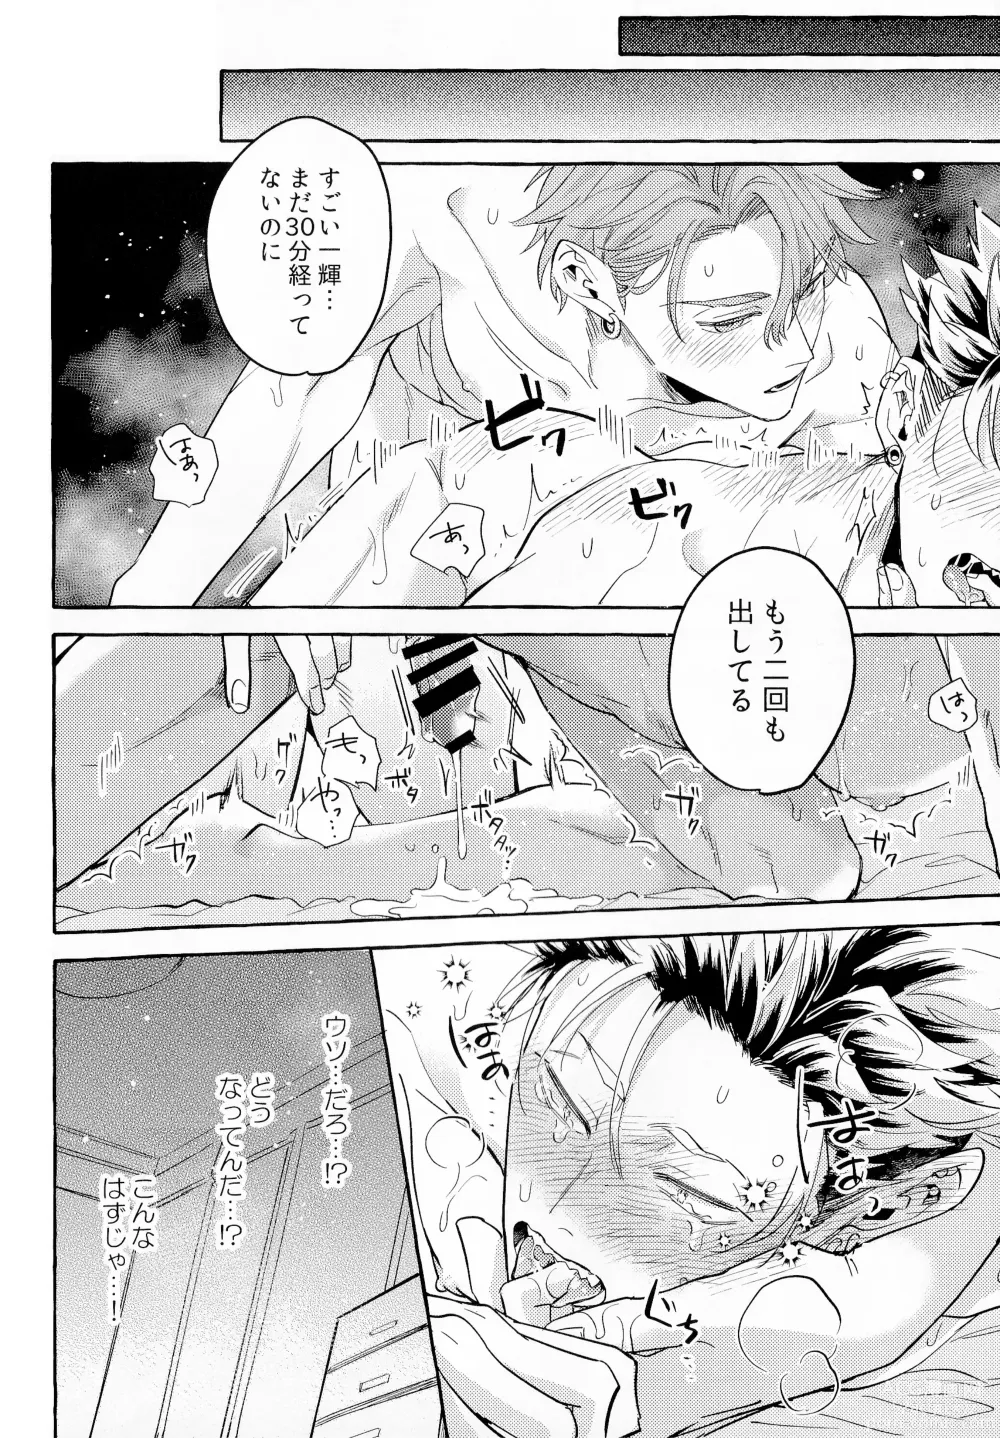 Page 19 of doujinshi skip run!run!run!